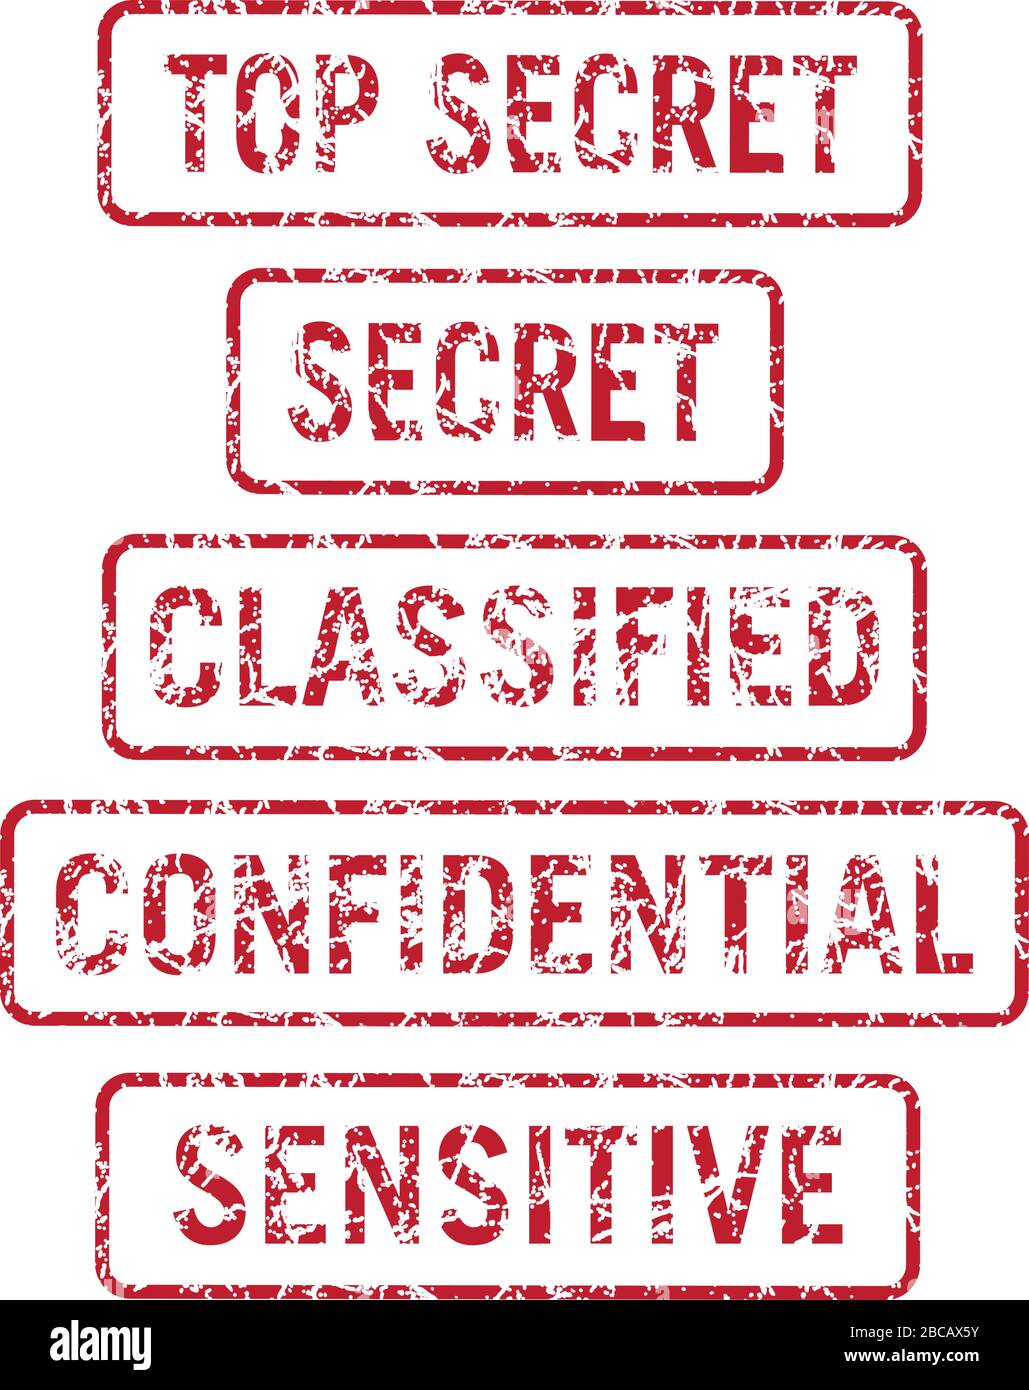 Informationssicherheit Top Secret, Secret, Classified, Confidential und Sensitive Stamps Distressed Isolated Vector Illustration Stock Vektor